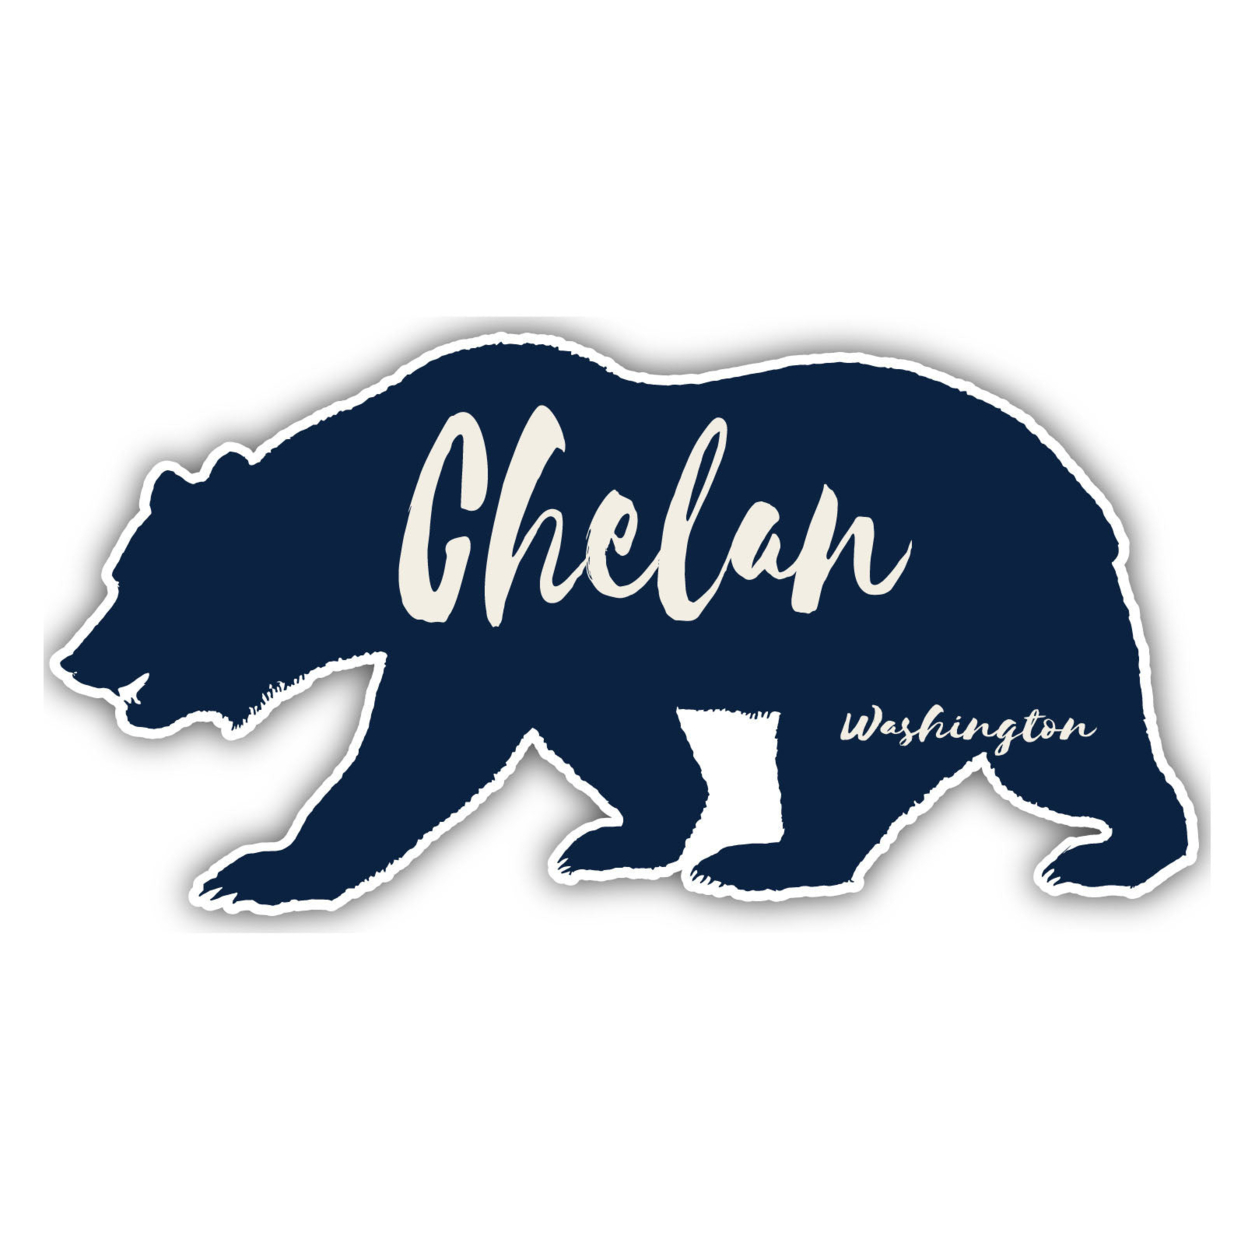 Chelan Washington Souvenir Decorative Stickers (Choose Theme And Size) - Single Unit, 8-Inch, Camp Life